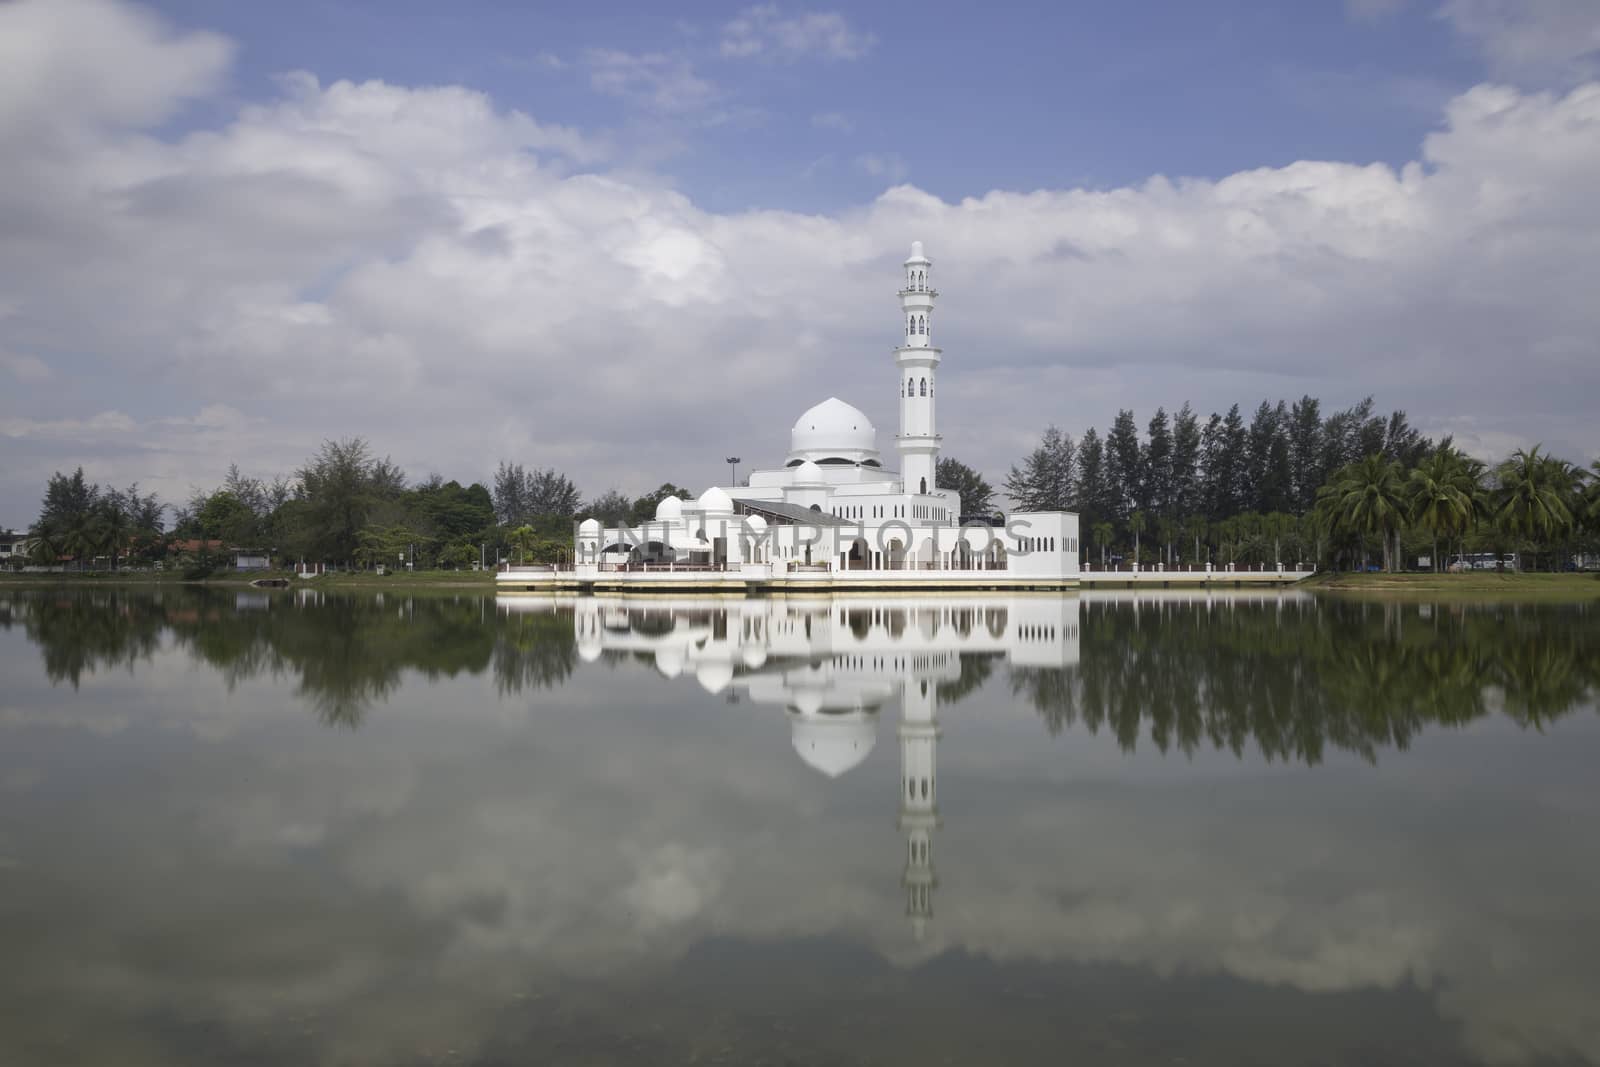 The Tengku Tengah Zaharah Mosque or the Floating Mosque is the first real floating mosque in Malaysia. It is situated in Kuala Ibai Lagoon near the estuary of Kuala Ibai River, 4 km from Kuala Terengganu Town. Construction began in 1993 and finished in 1995.